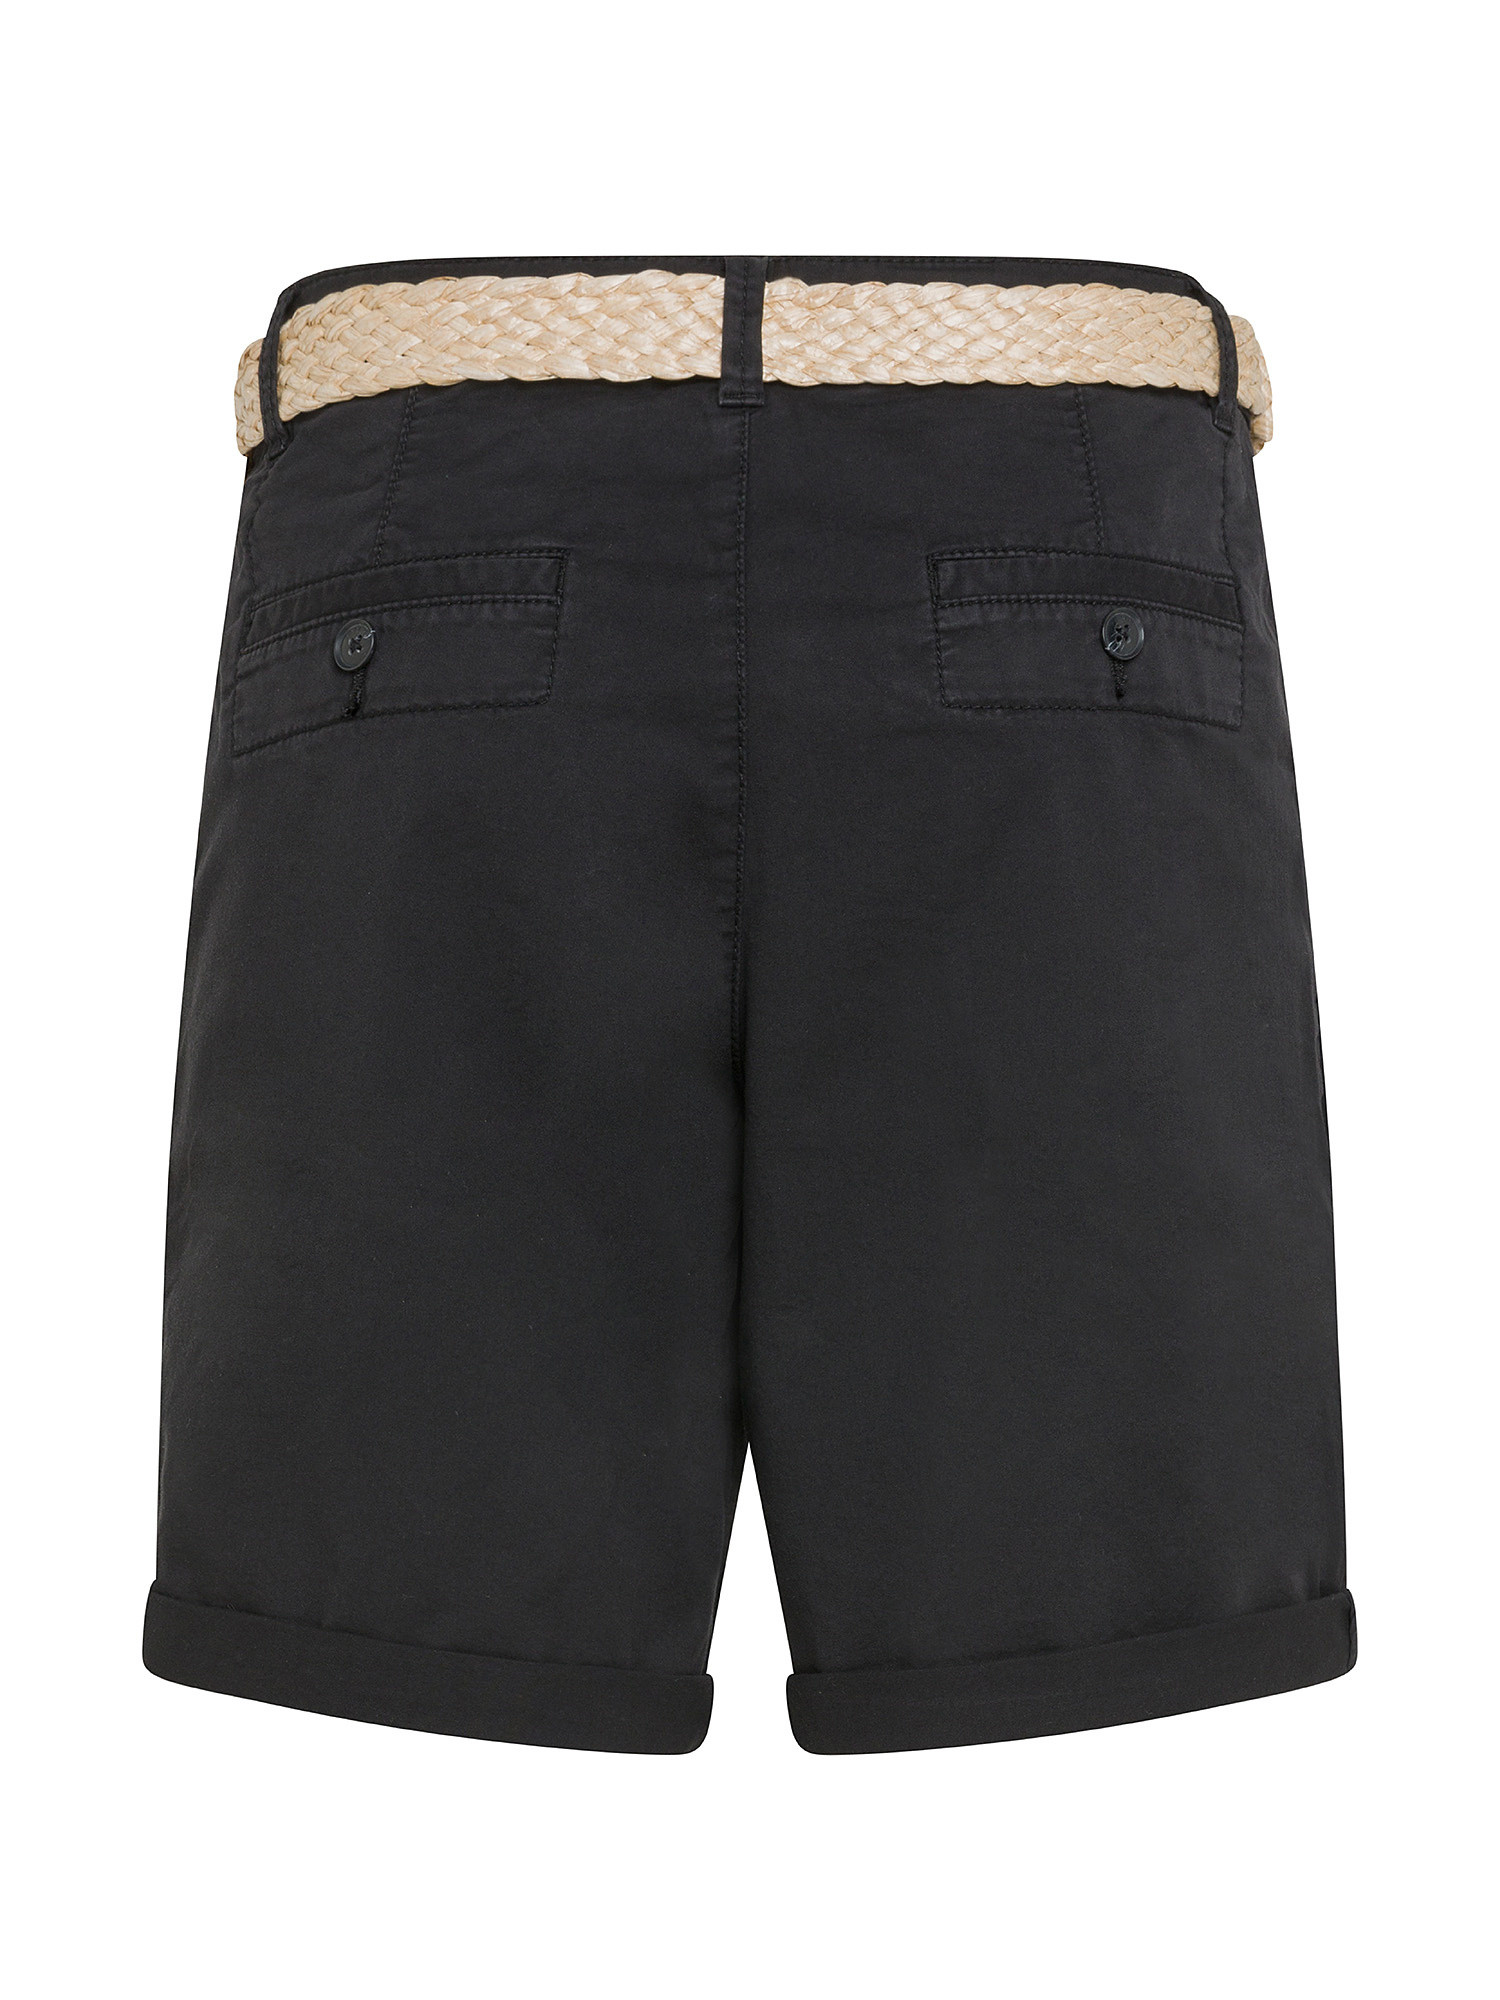 Esprit - Shorts with braided raffia belt, Black, large image number 1